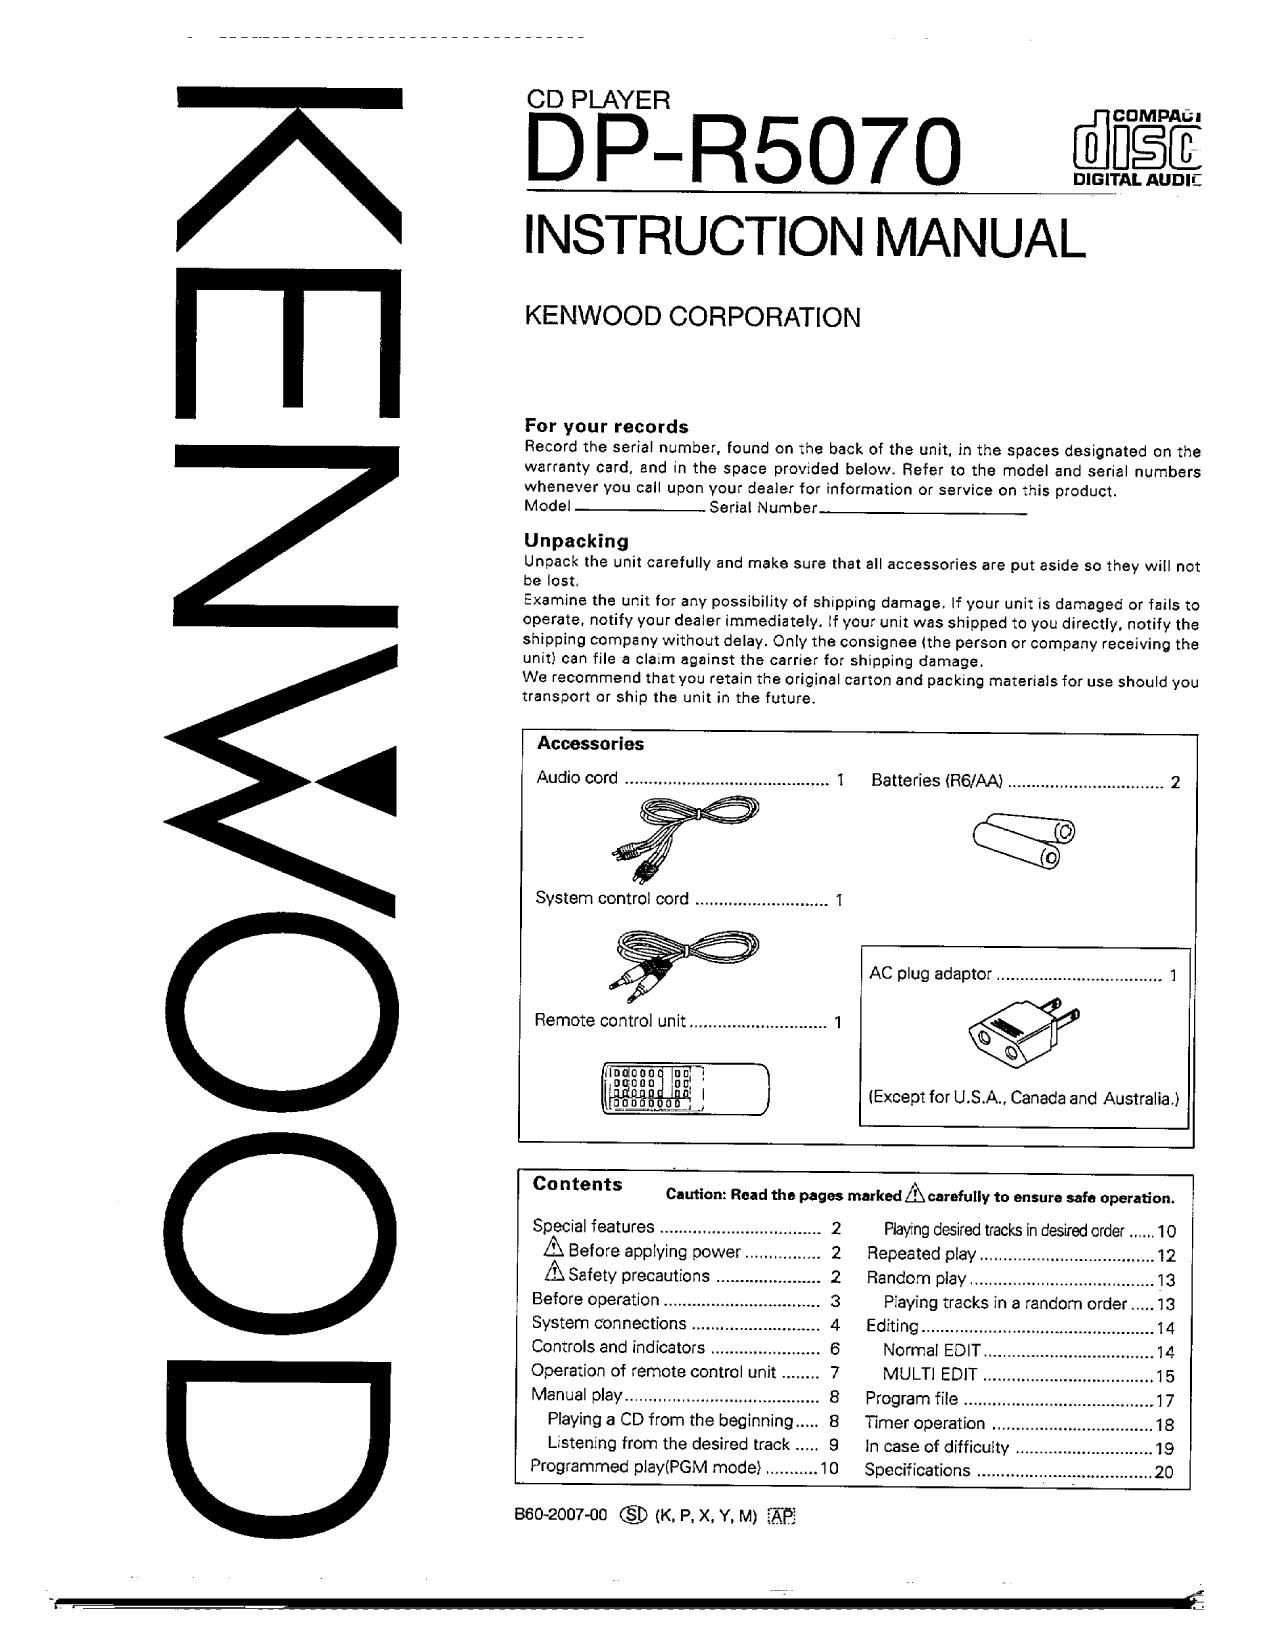 Kenwood DPR 5070 Owners Manual